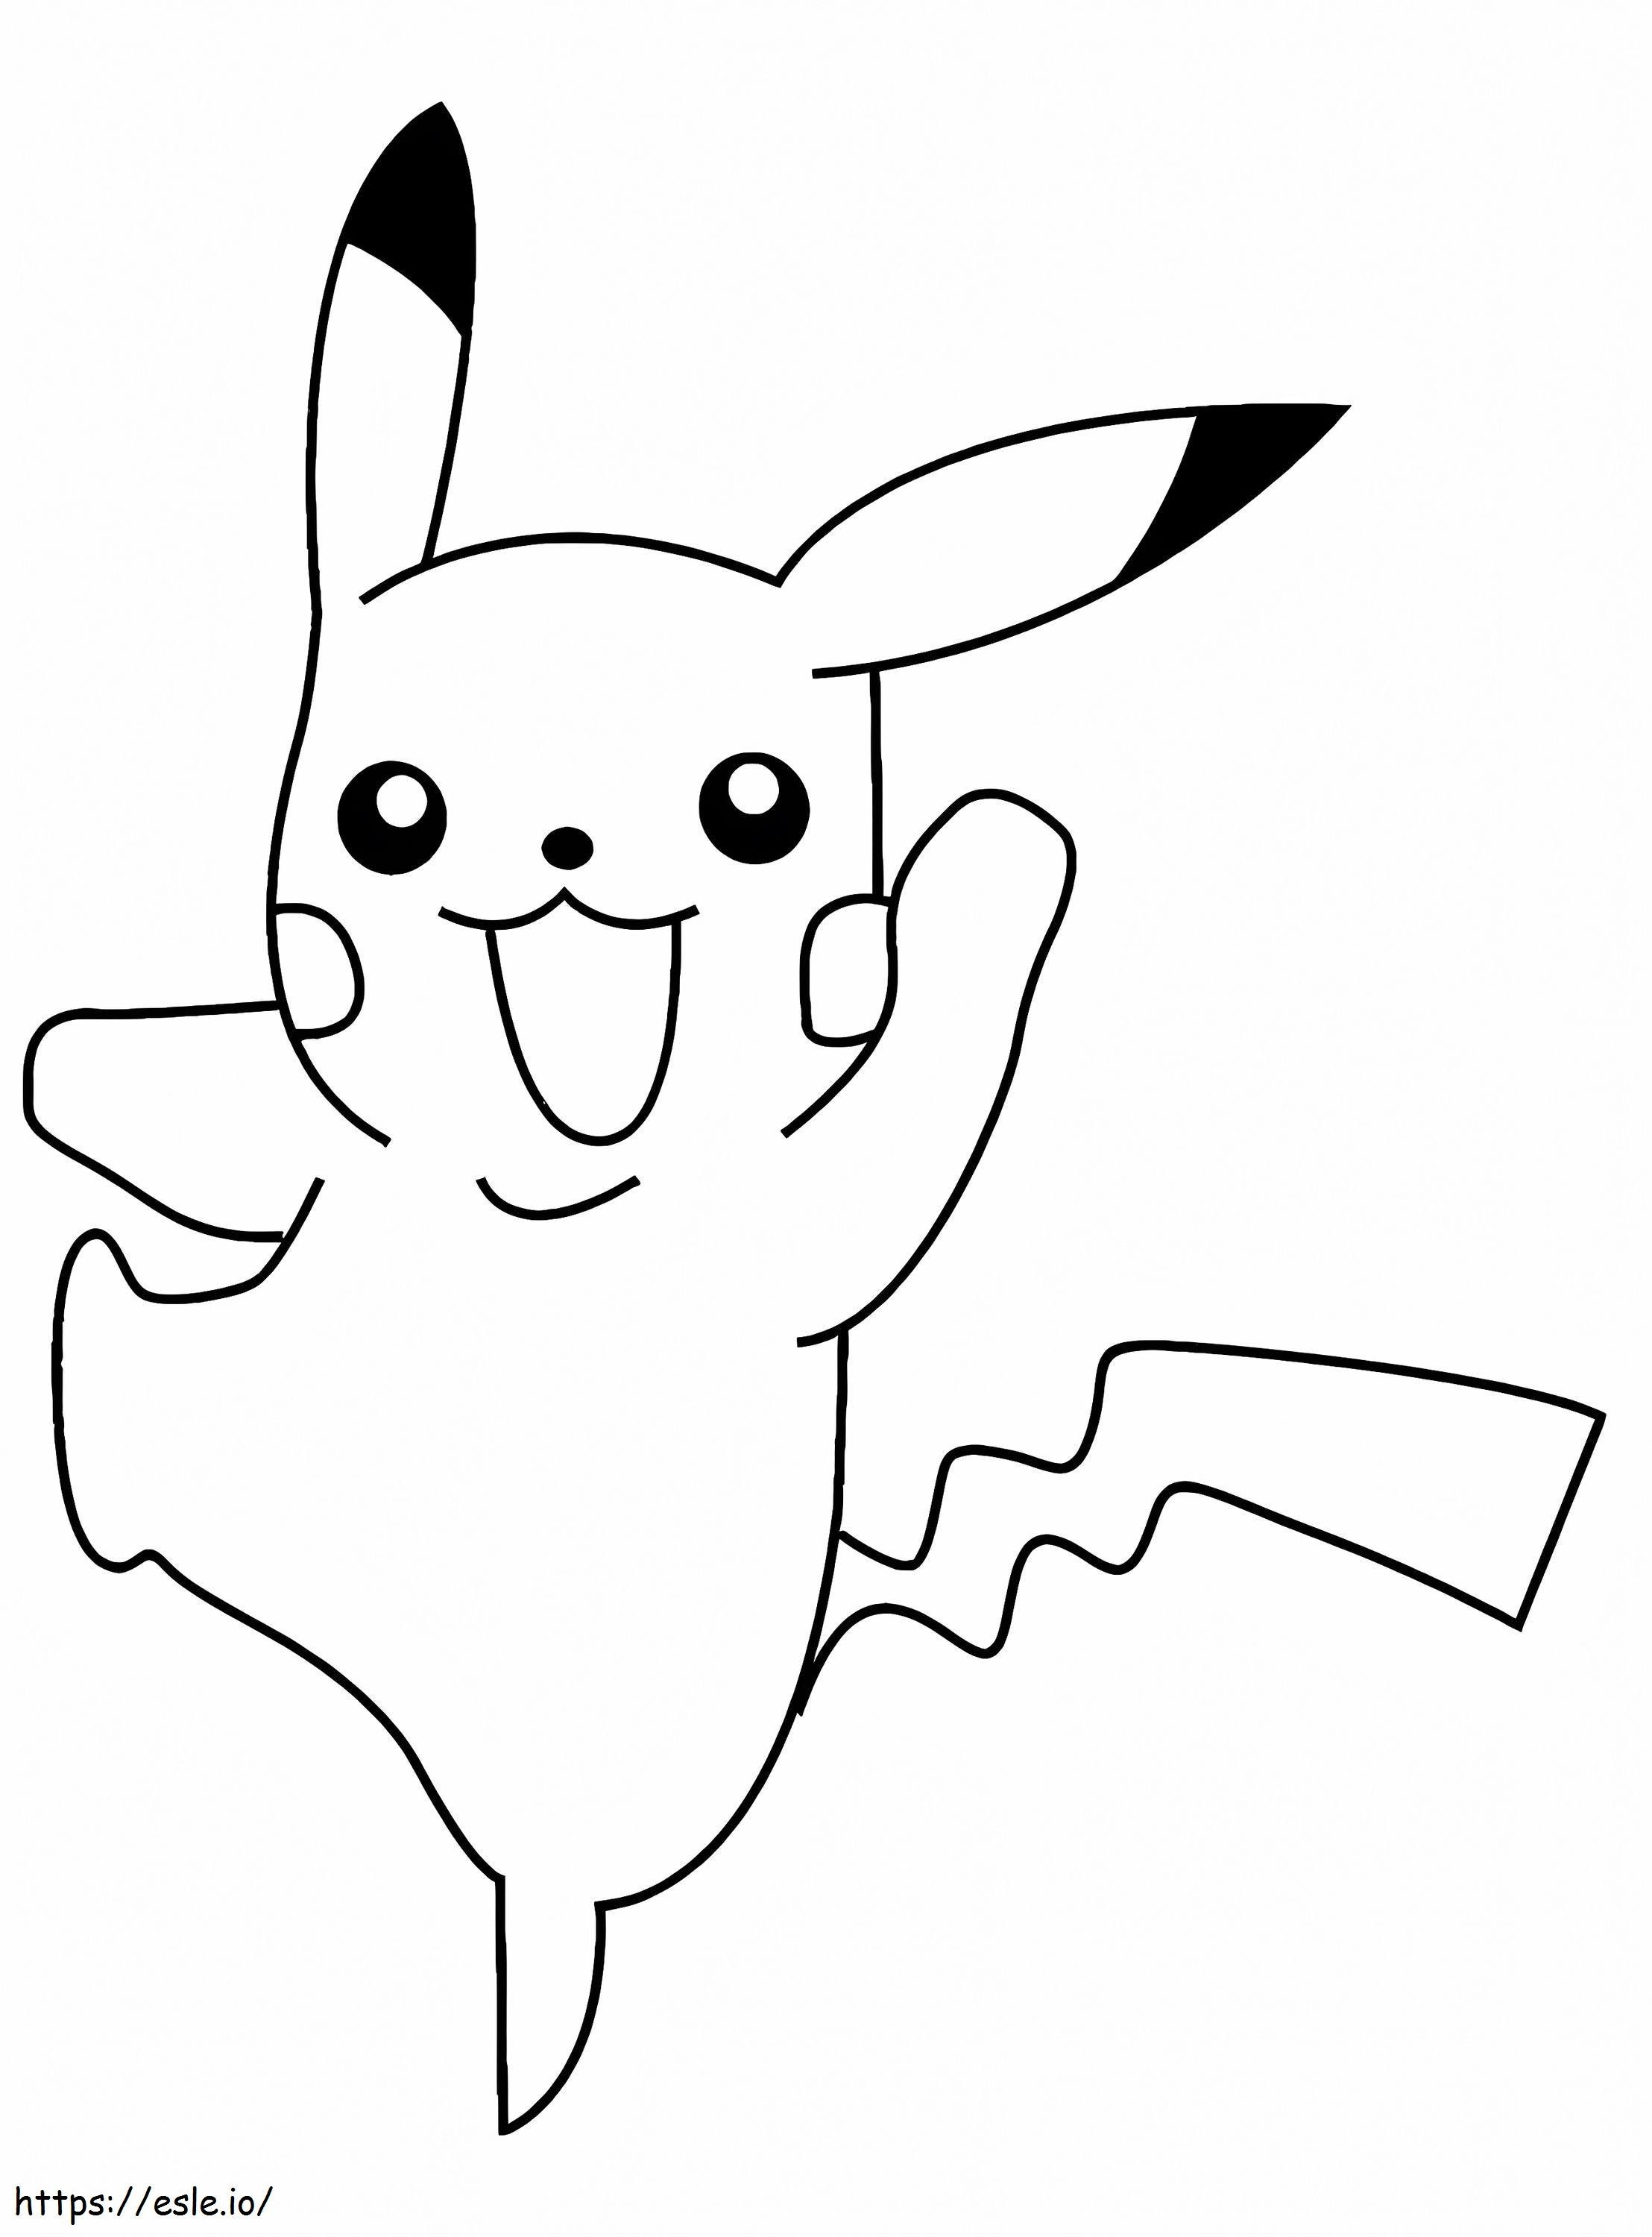 Coloriage Pikachu saute à imprimer dessin